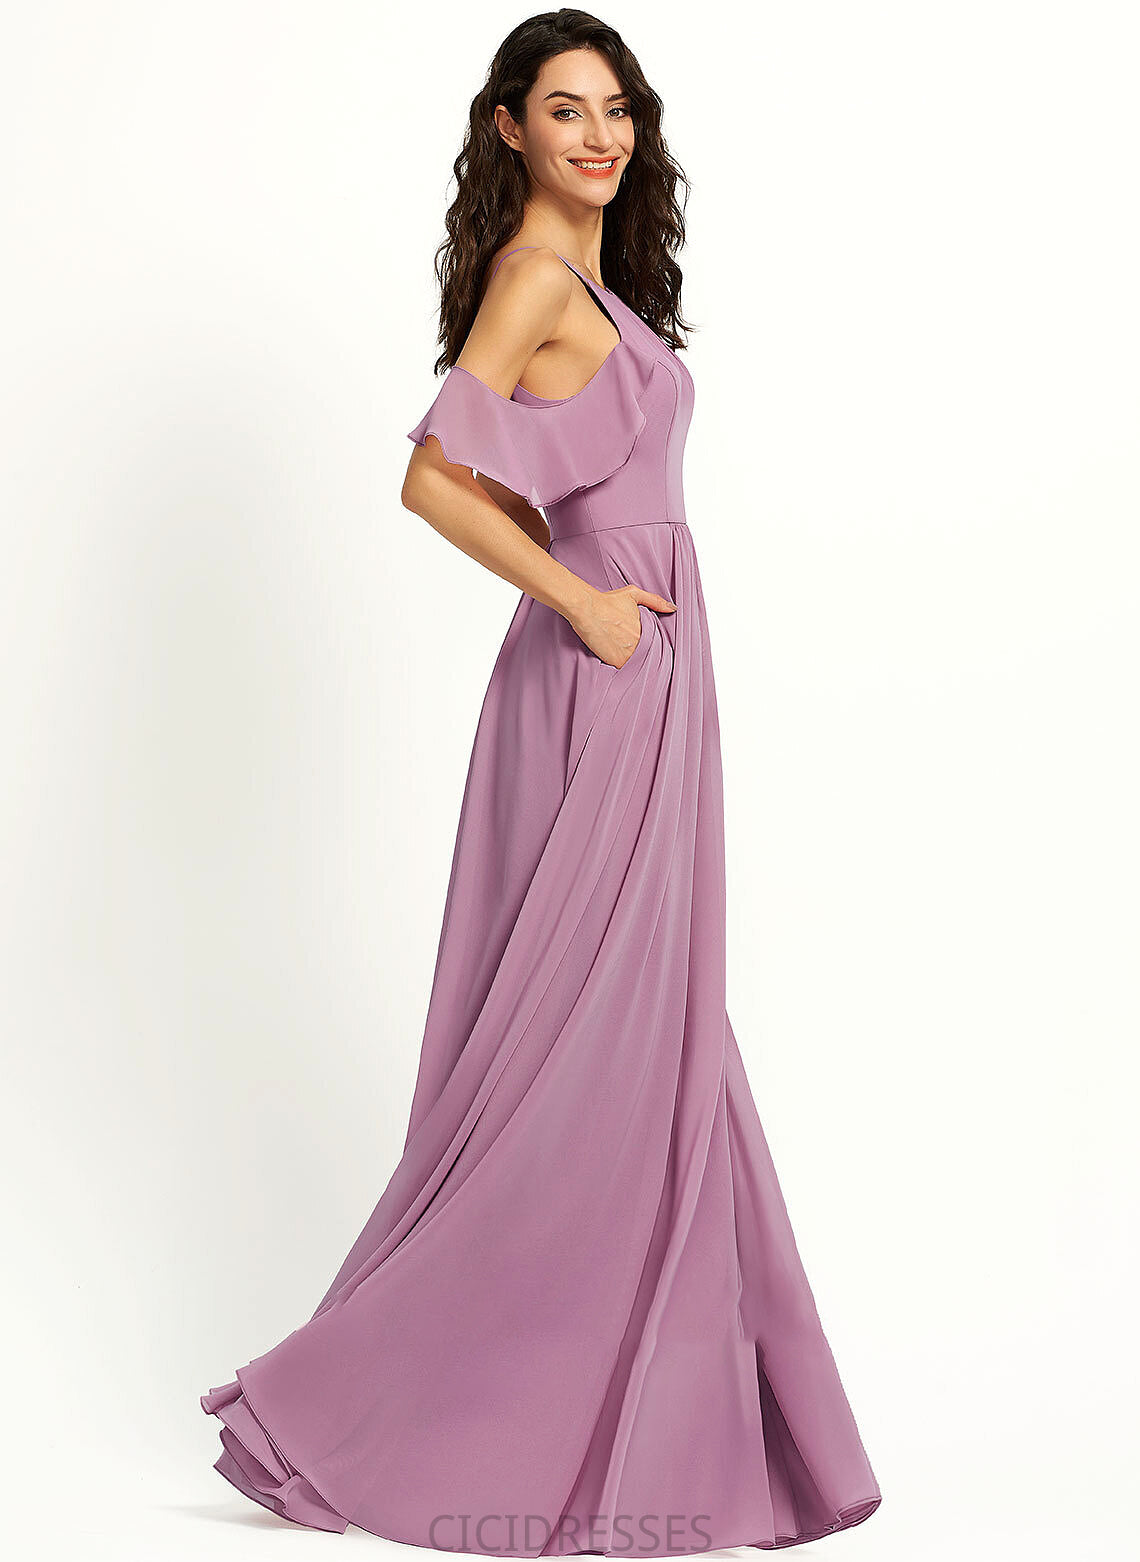 Silhouette Length A-Line Fabric Embellishment Pockets Floor-Length ScoopNeck Neckline Minnie Natural Waist Floor Length Bridesmaid Dresses